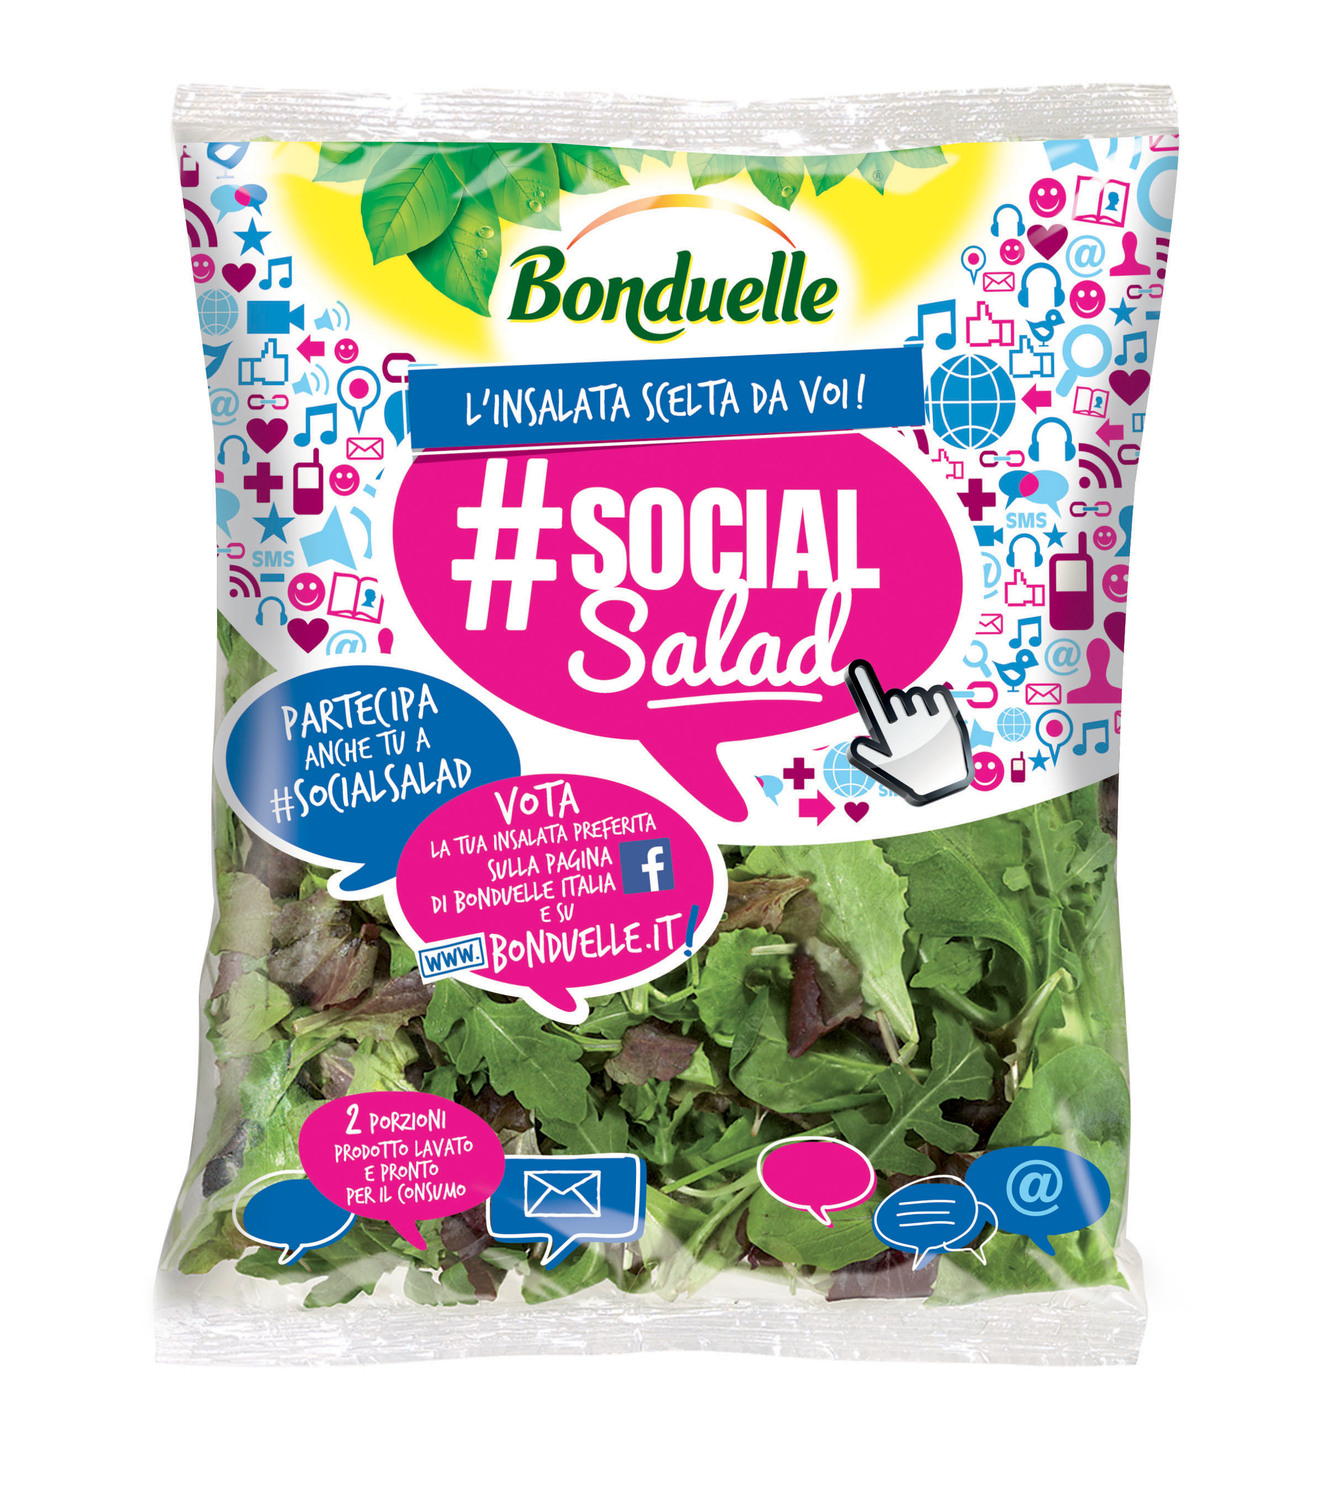  Bonduelle propone la prima #SocialSalad 